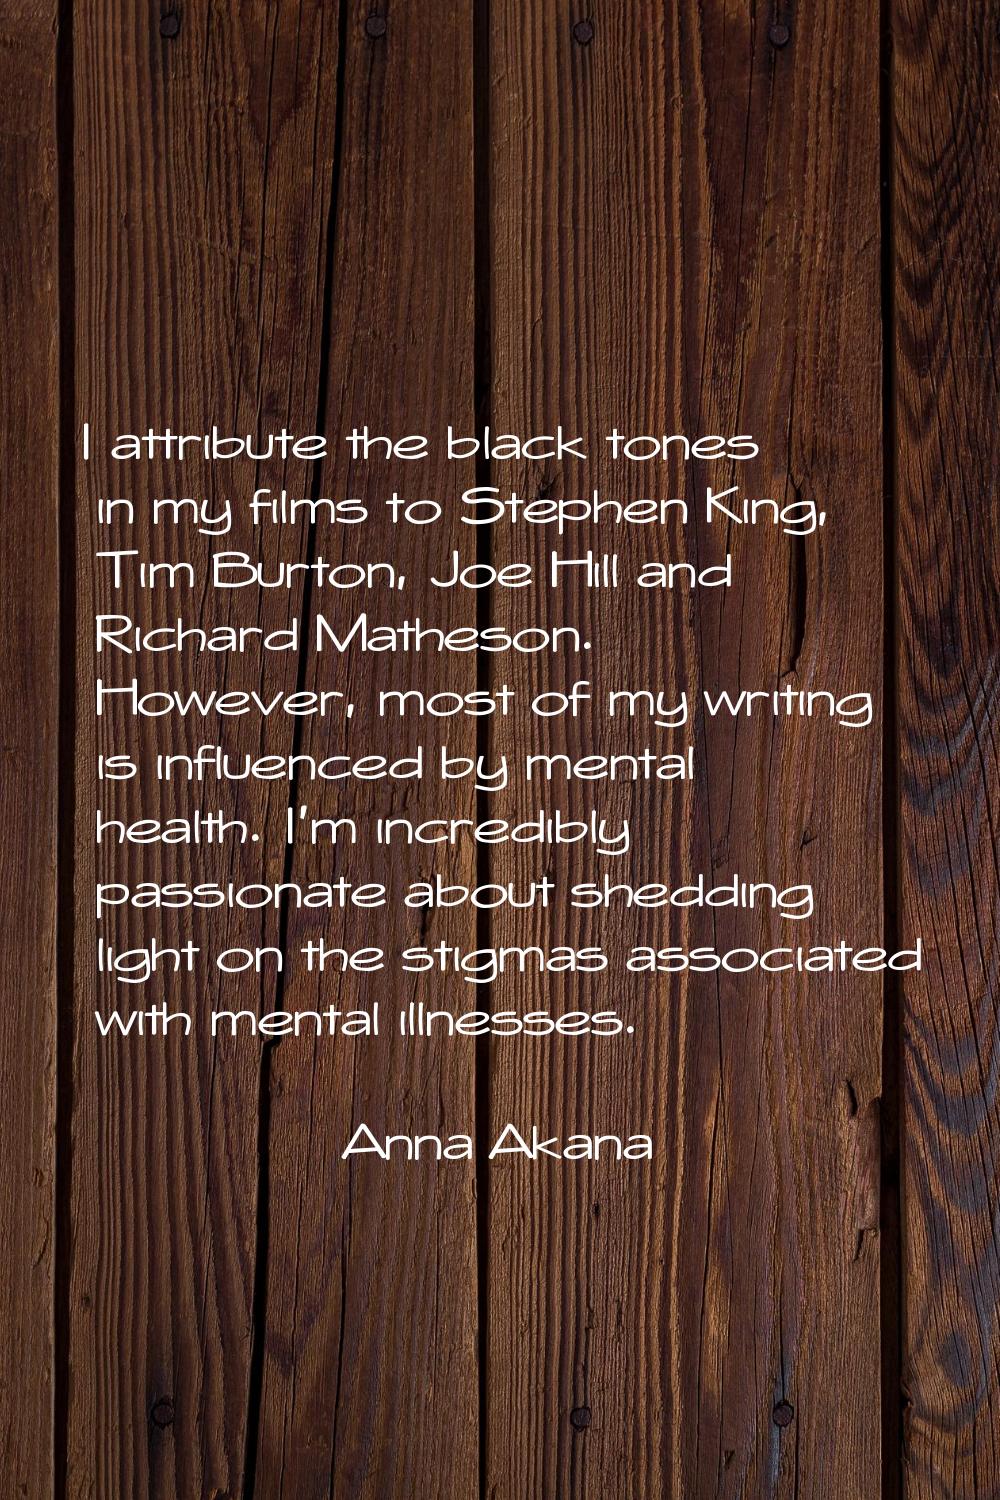 I attribute the black tones in my films to Stephen King, Tim Burton, Joe Hill and Richard Matheson.